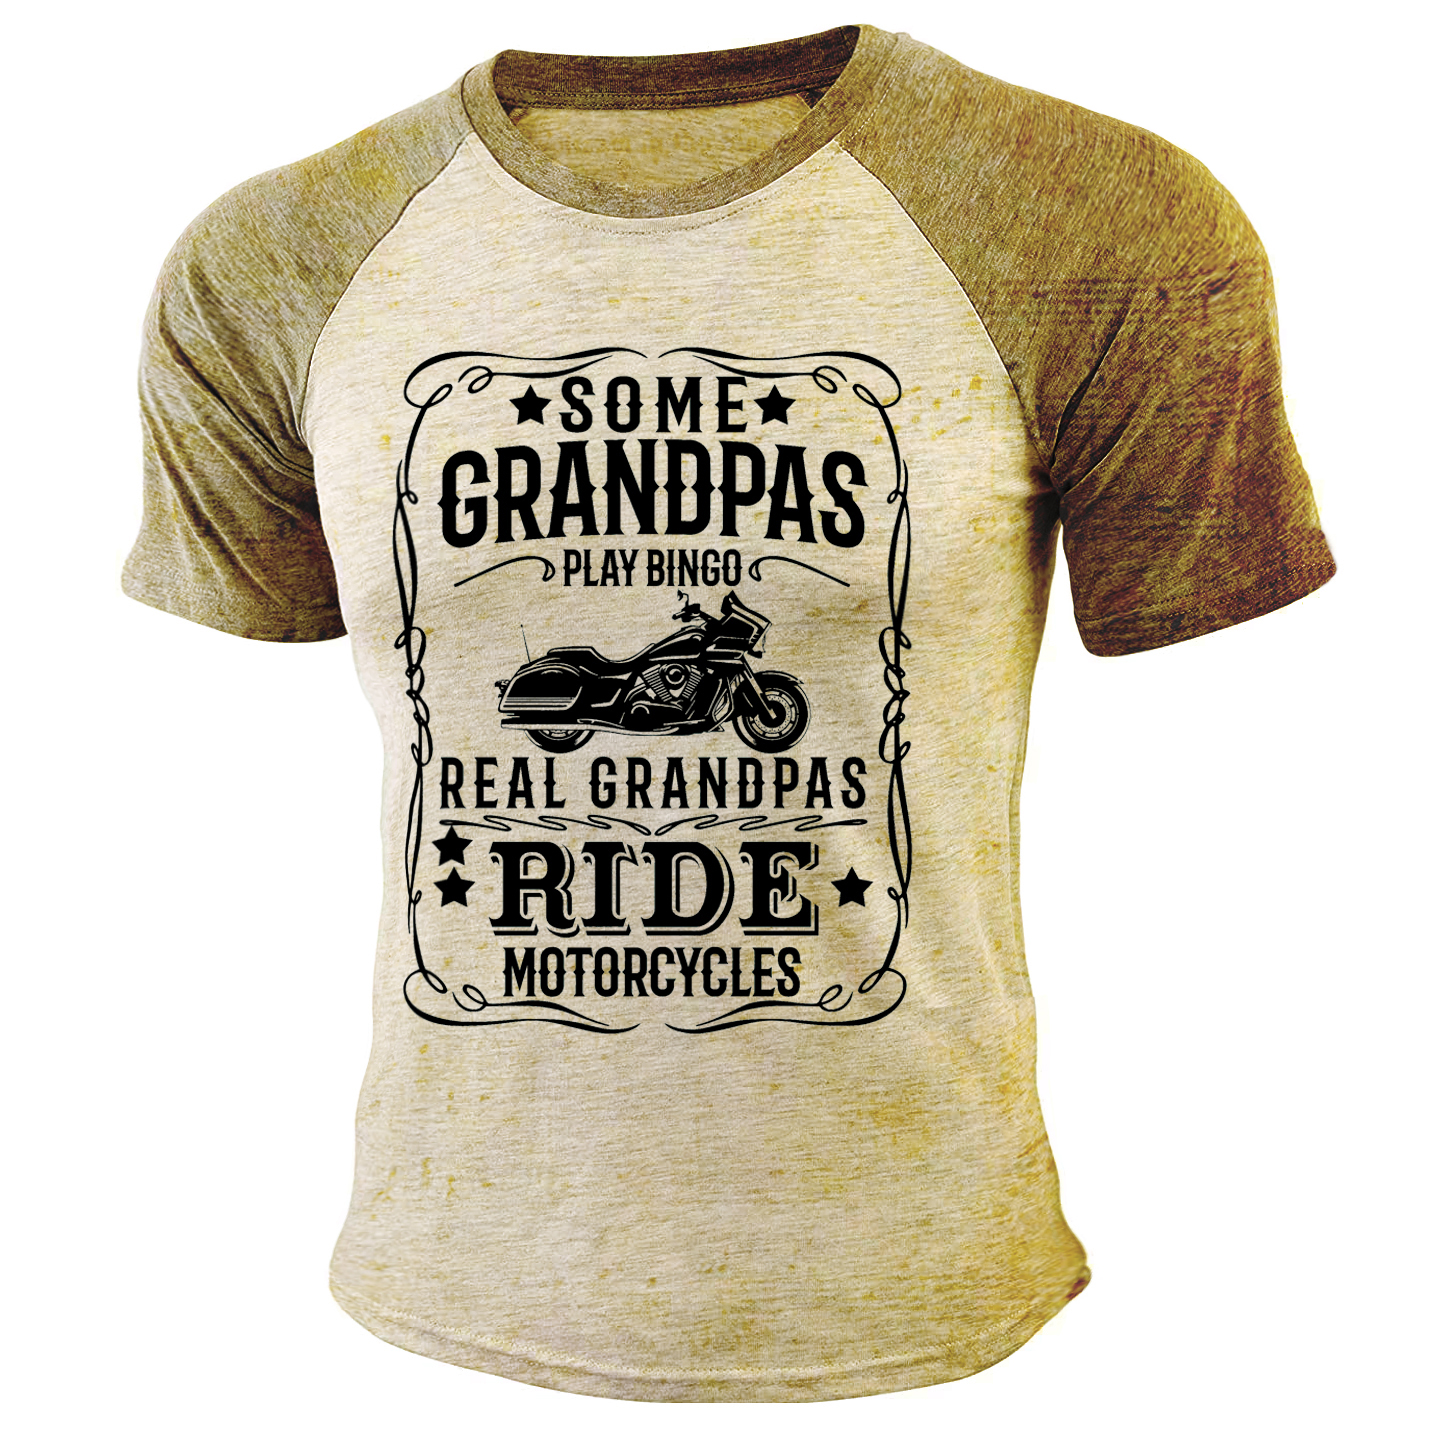 Men's Outdoor Some Grandpas Chic Play Bingo Ride Motorcycles Print T-shirt